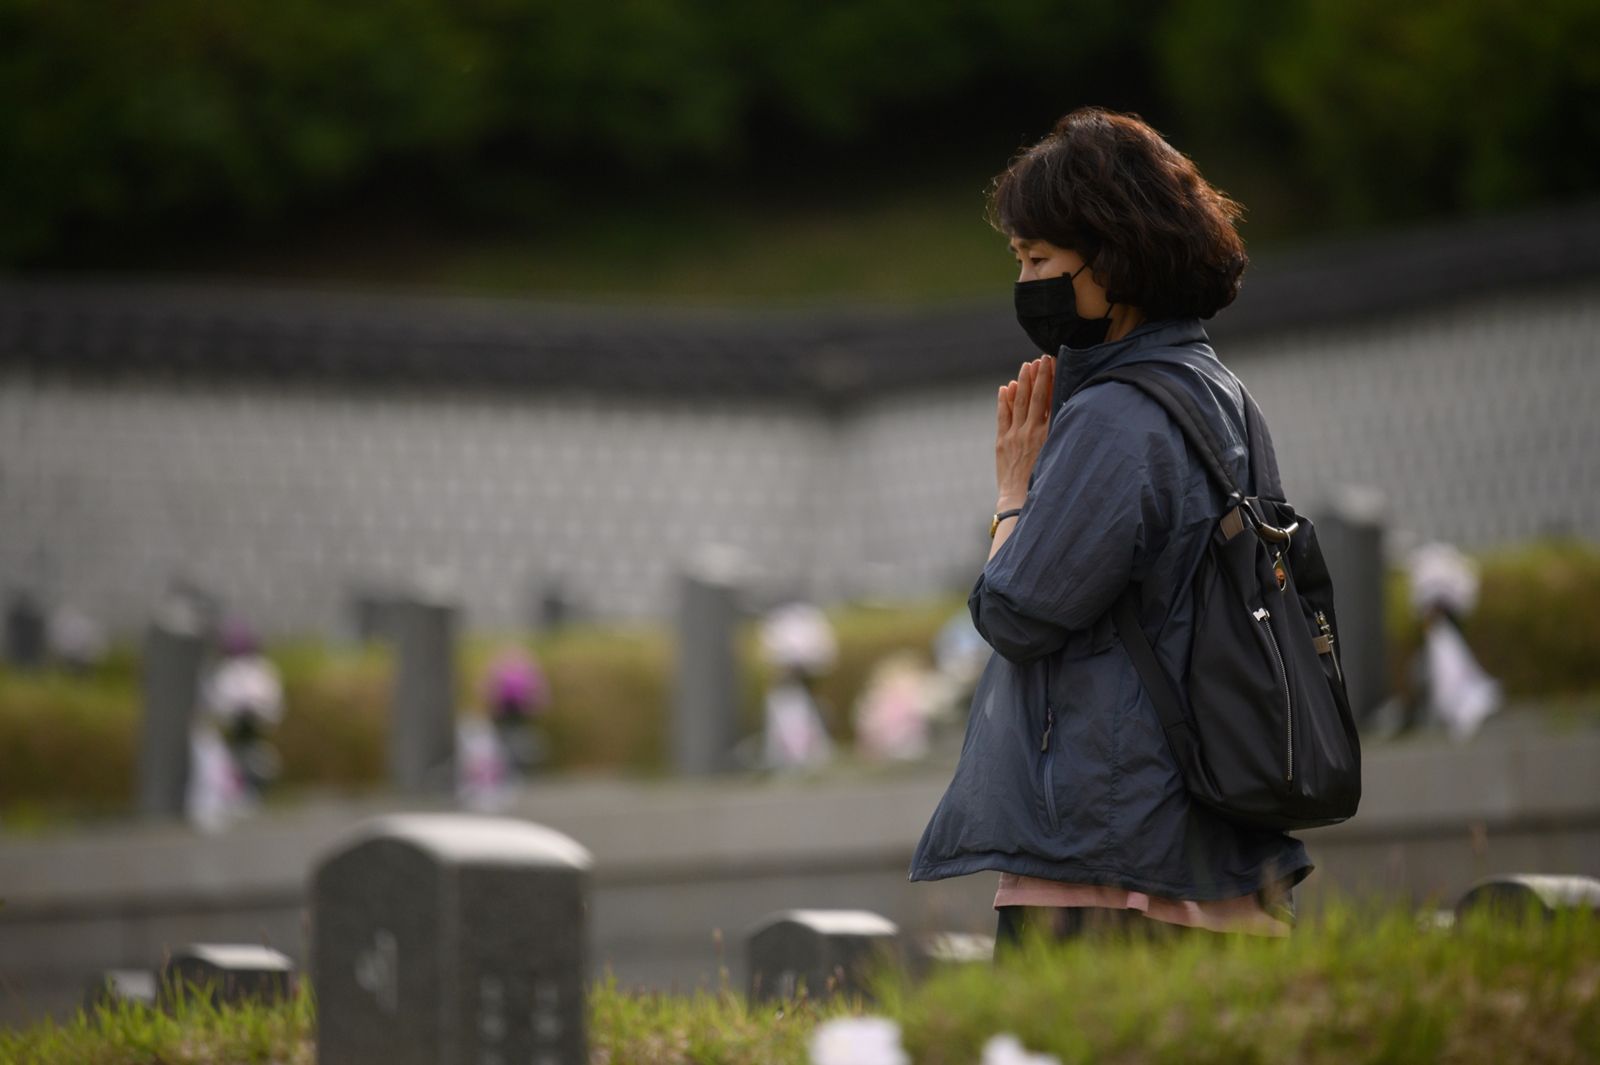 AFP-ญาติผู้เสียชีวิตในเหตุการณ์ May 18 ที่เมืองกวางจู เคารพศพที่อนุสรณ์สถาน 14 พ.ค.2020.jpg